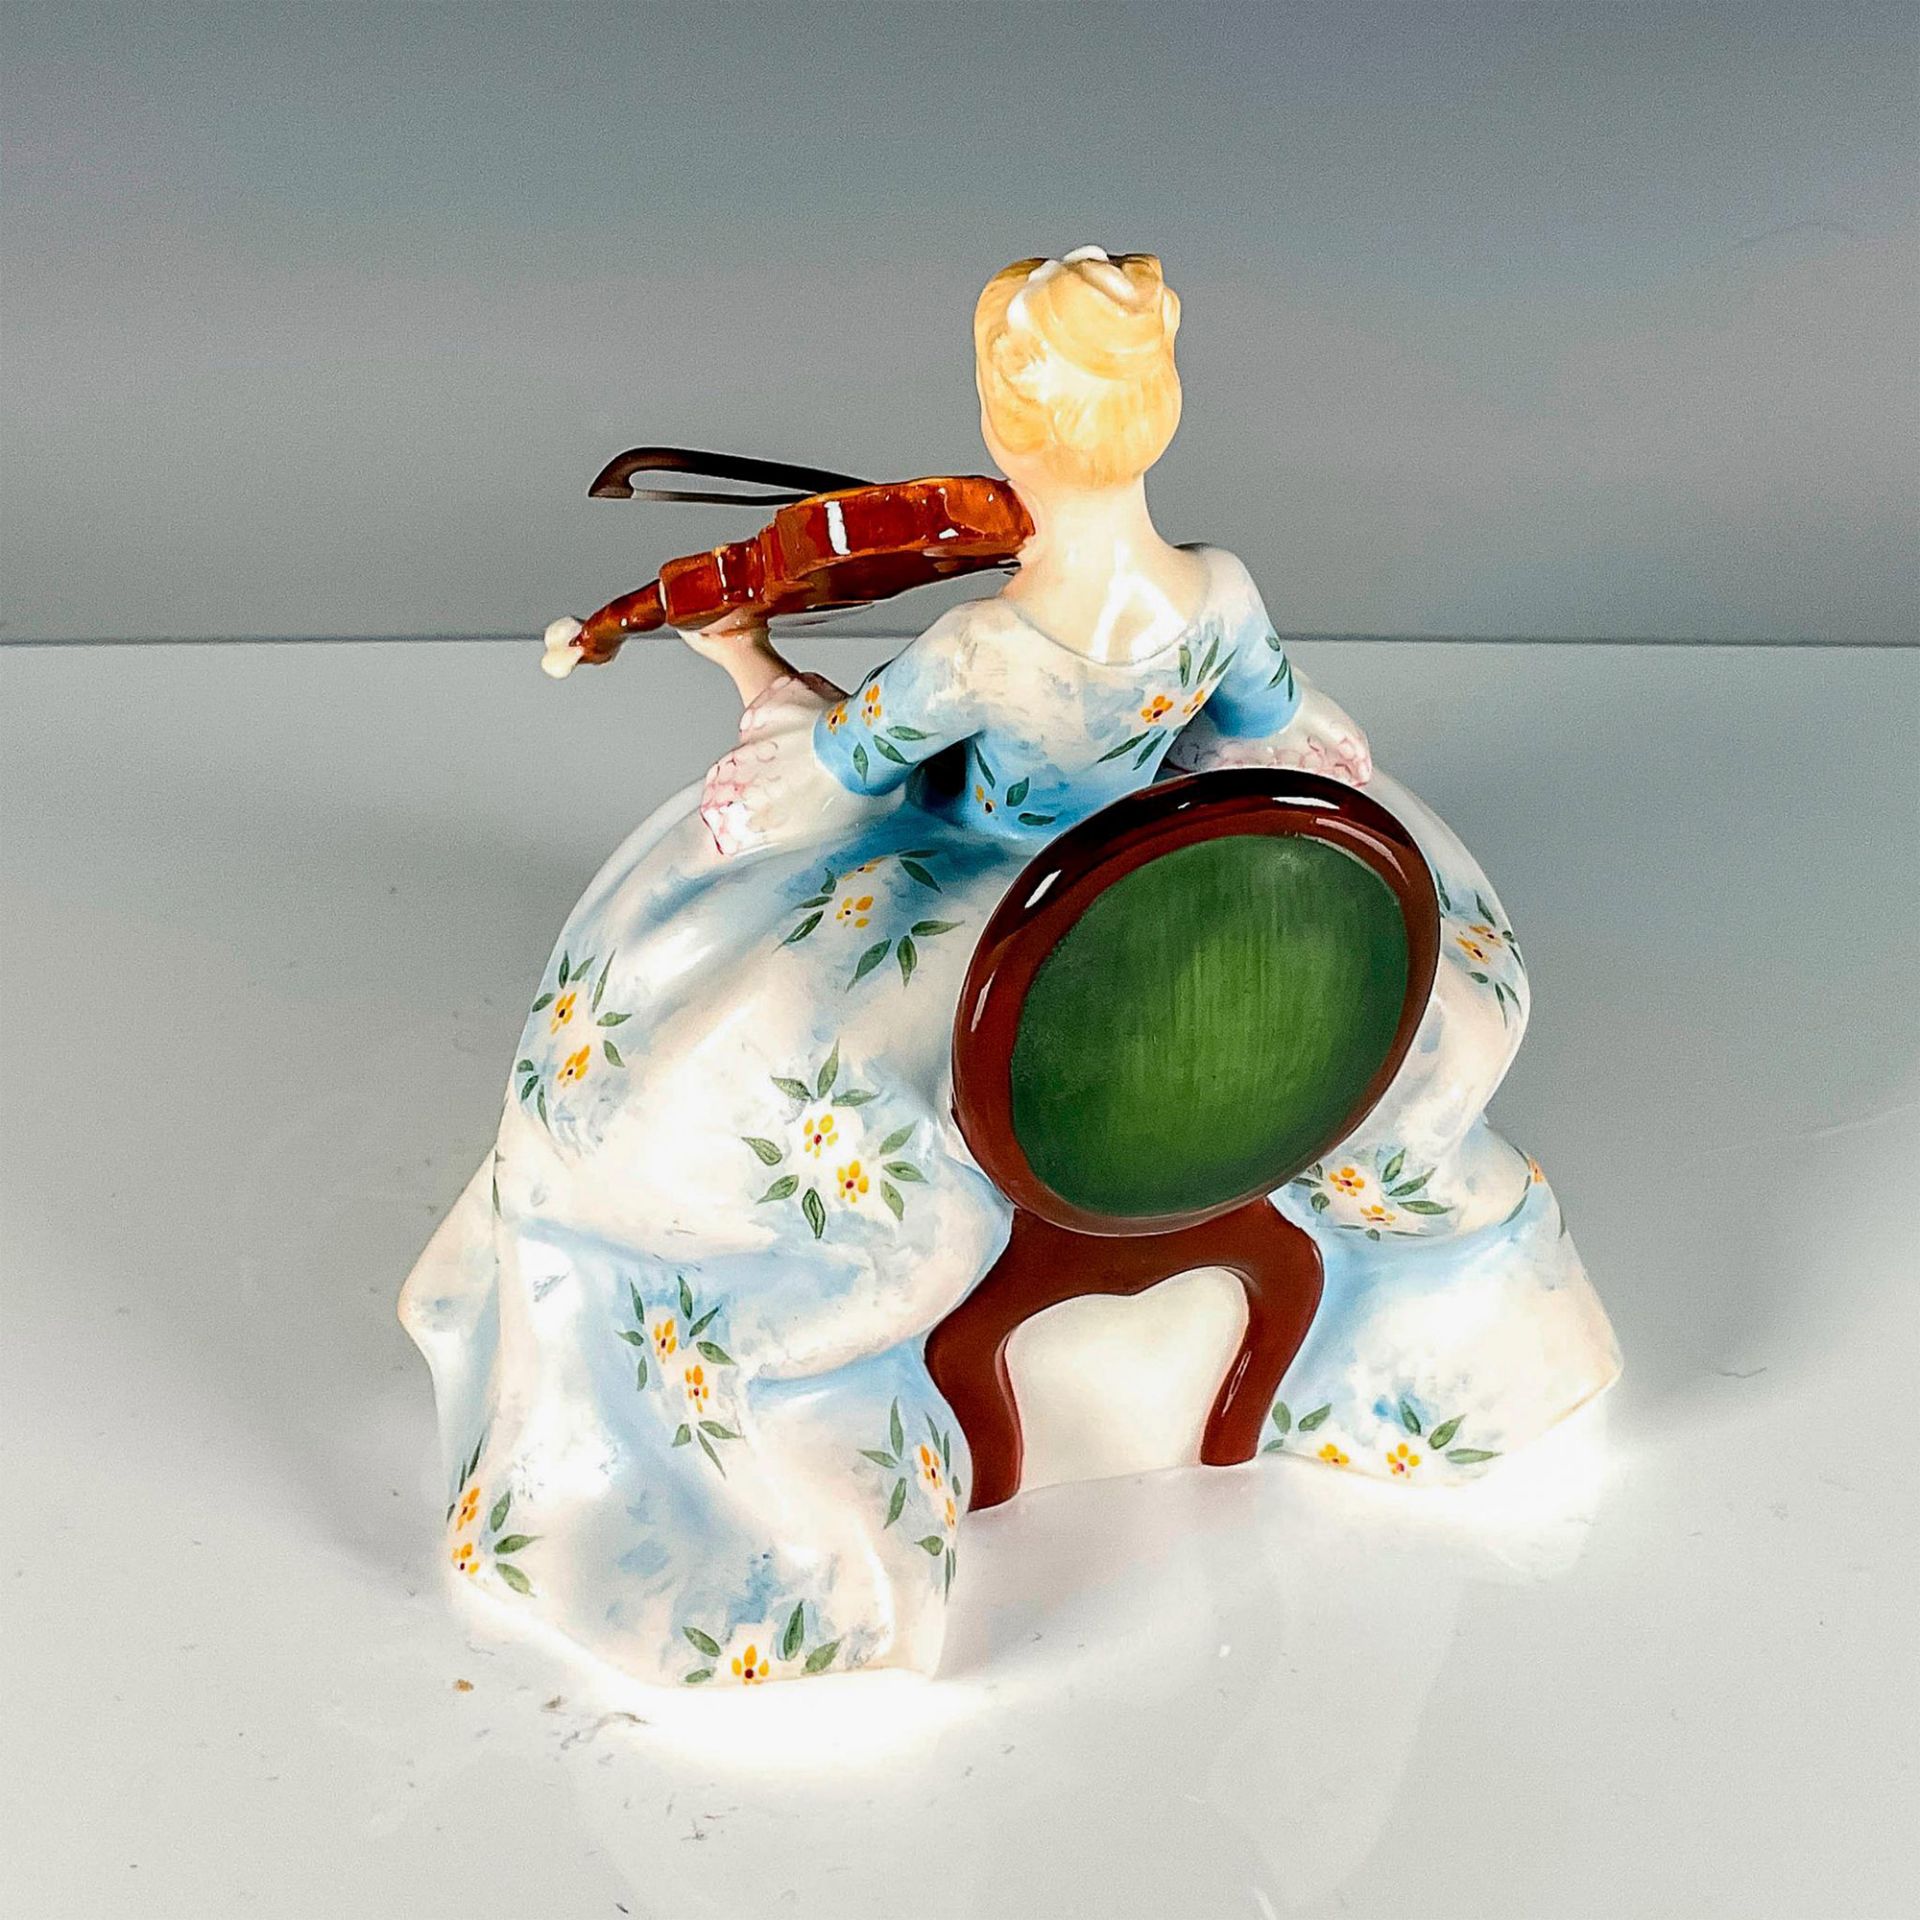 Viola d'Amore - HN2797 - Royal Doulton Figurine - Image 2 of 3